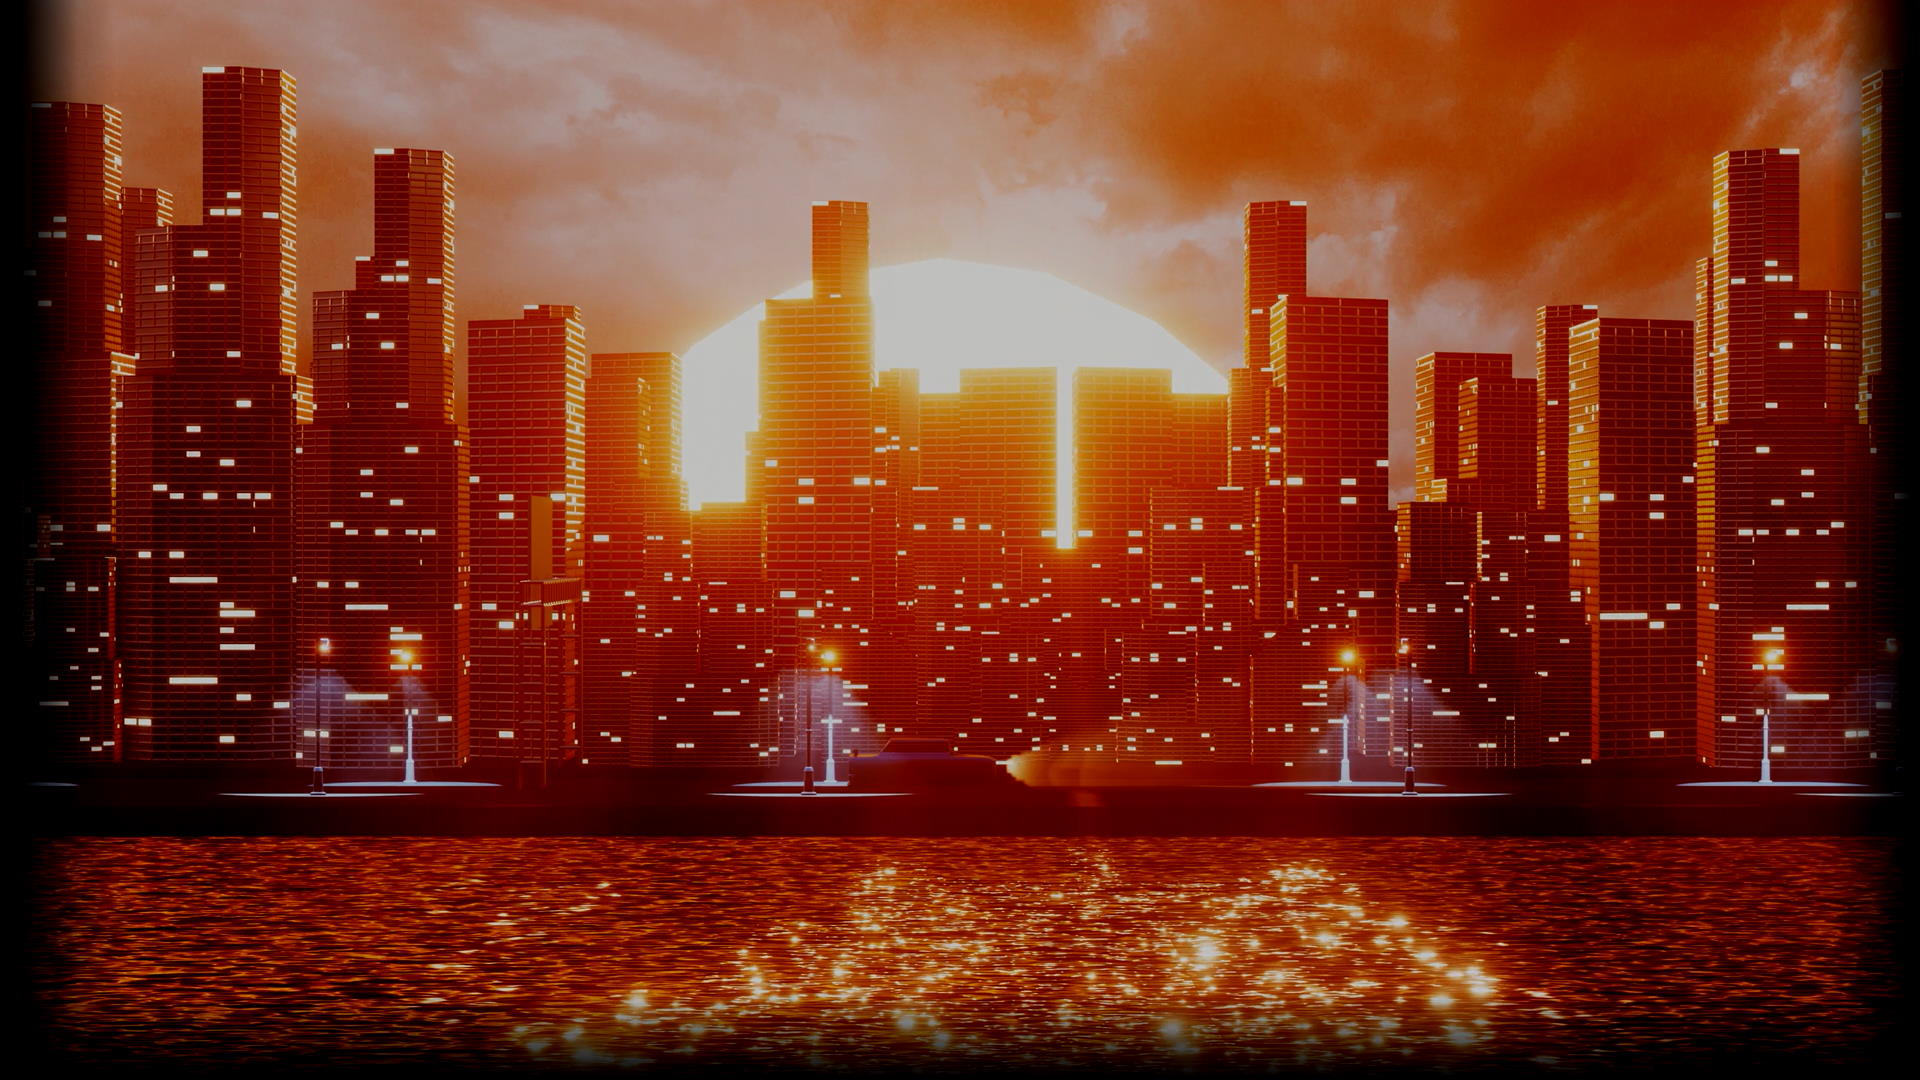  | Background - Retrowave - Sunset City